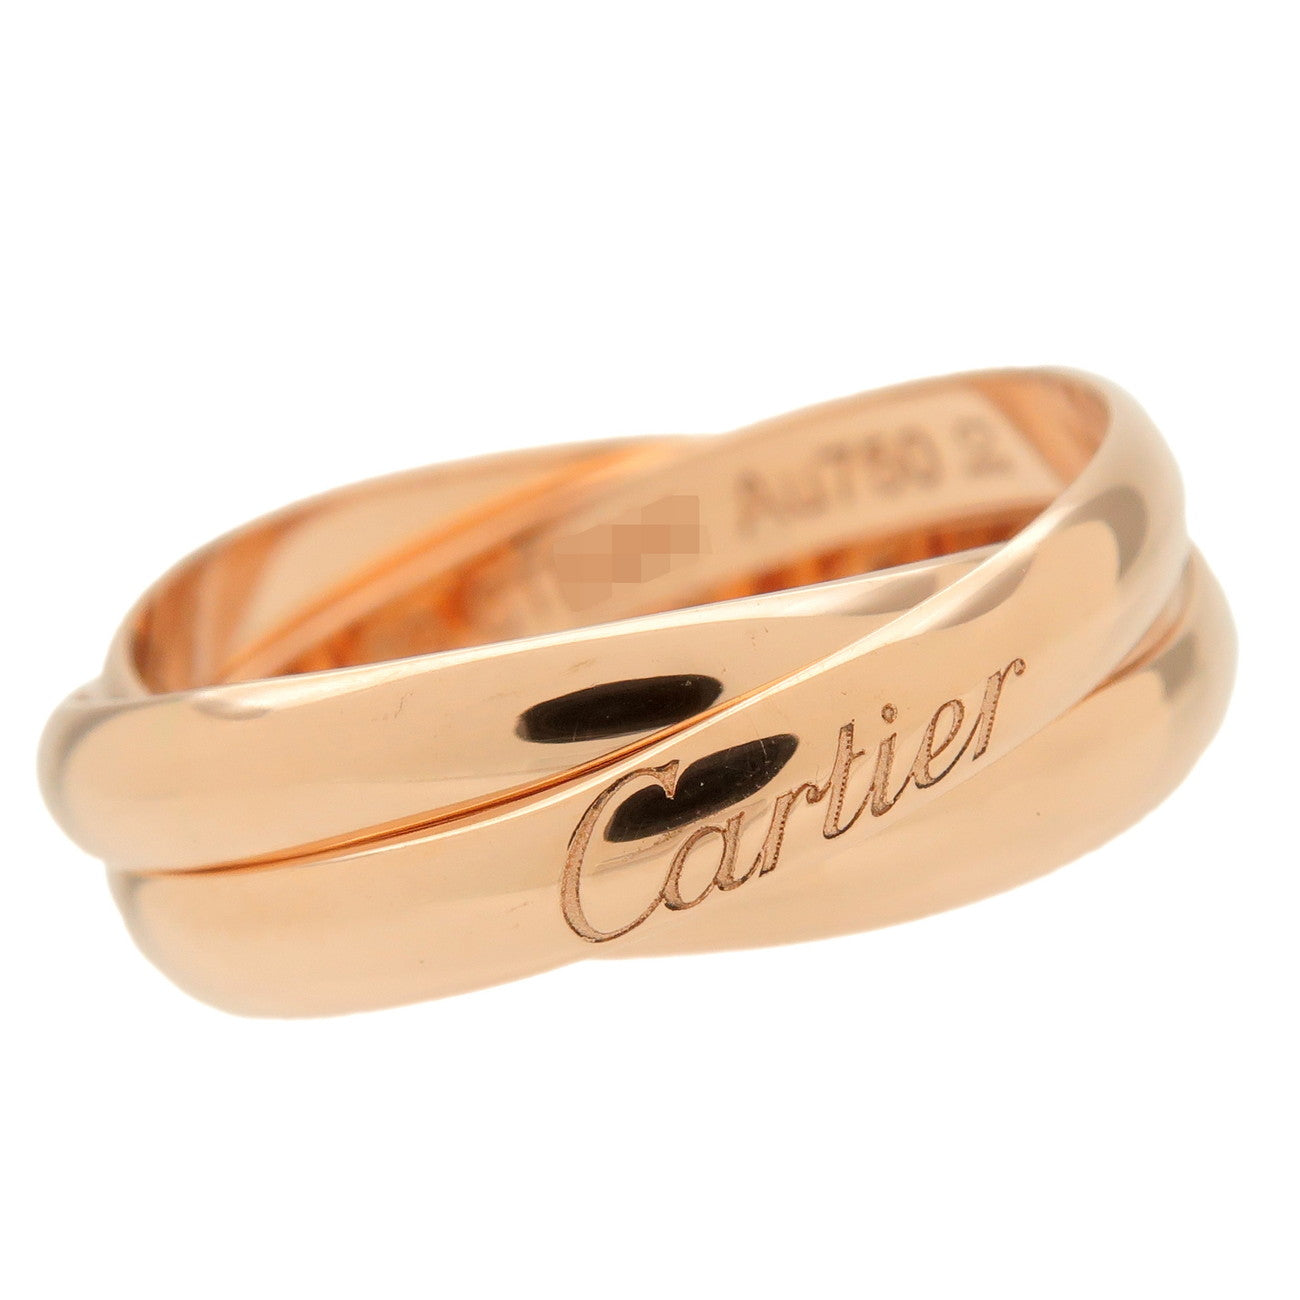 Cartier Trinity Ring SM K18PG 750PG Rose Gold #50 US5.5 EU50.5